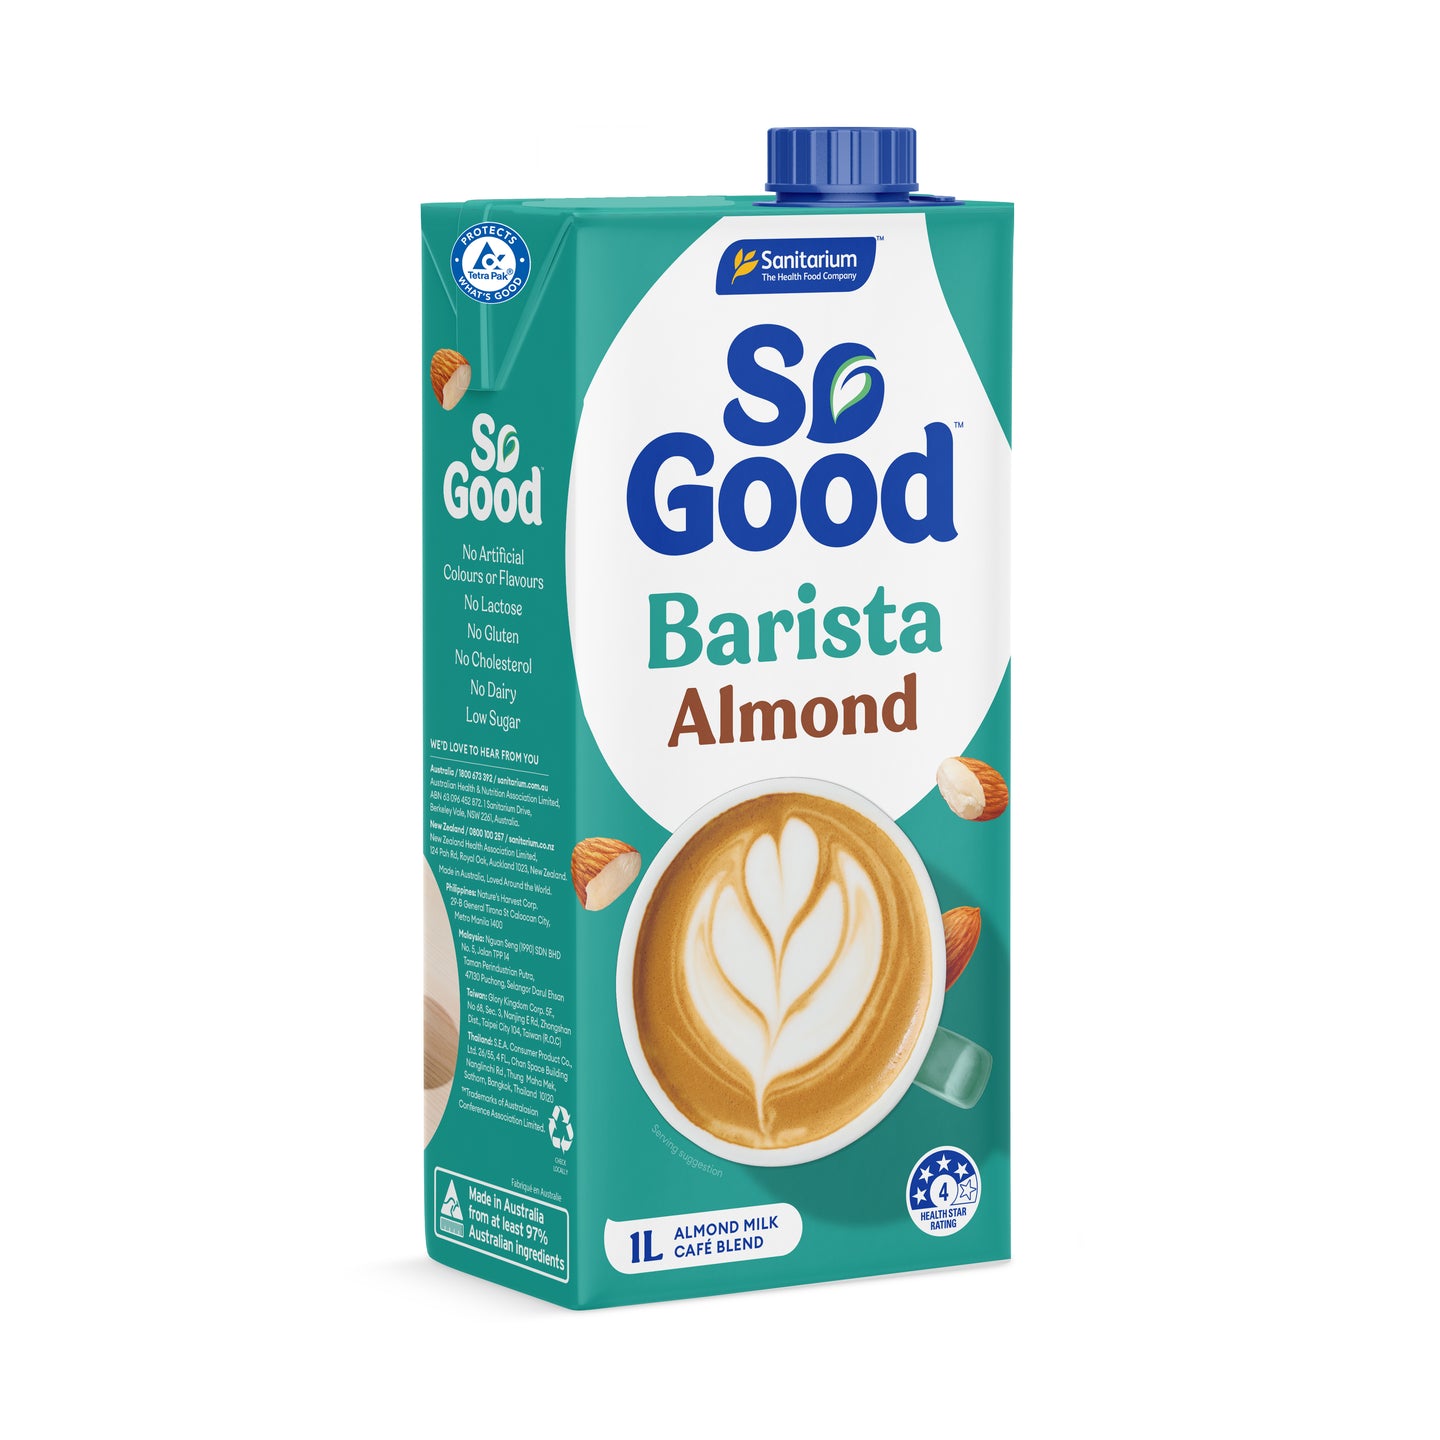 (Buy 3) So Good Barista Almond Milk 1 Liter